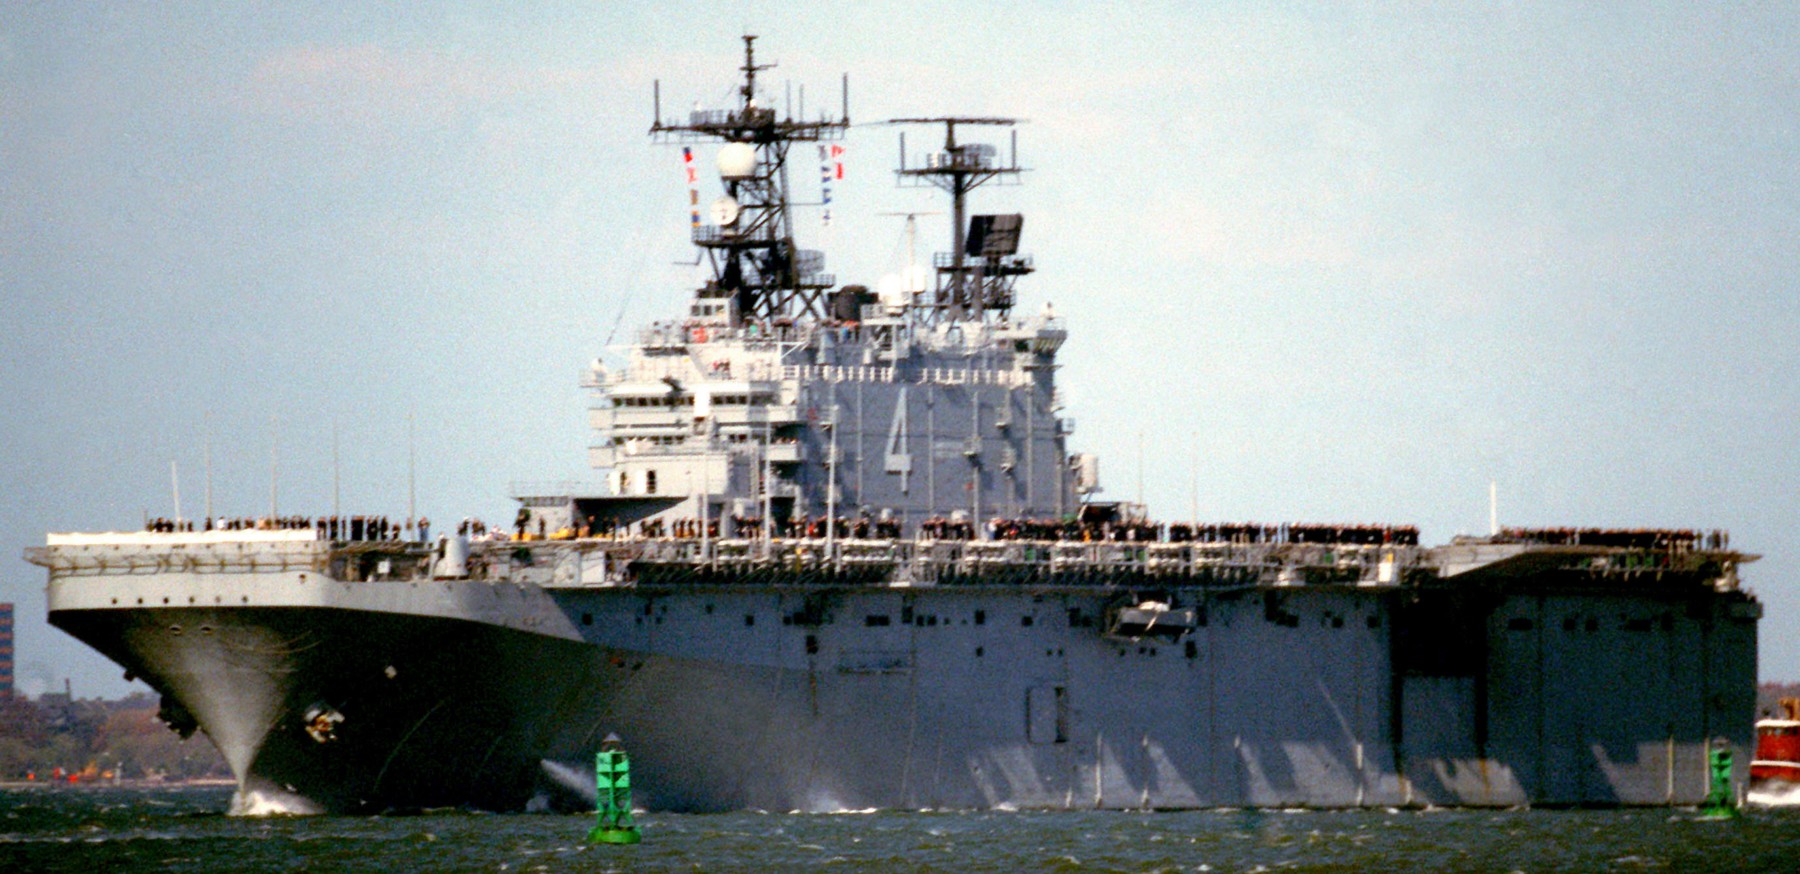 lha-4 uss nassau tarawa class amphibious assault ship us navy 120